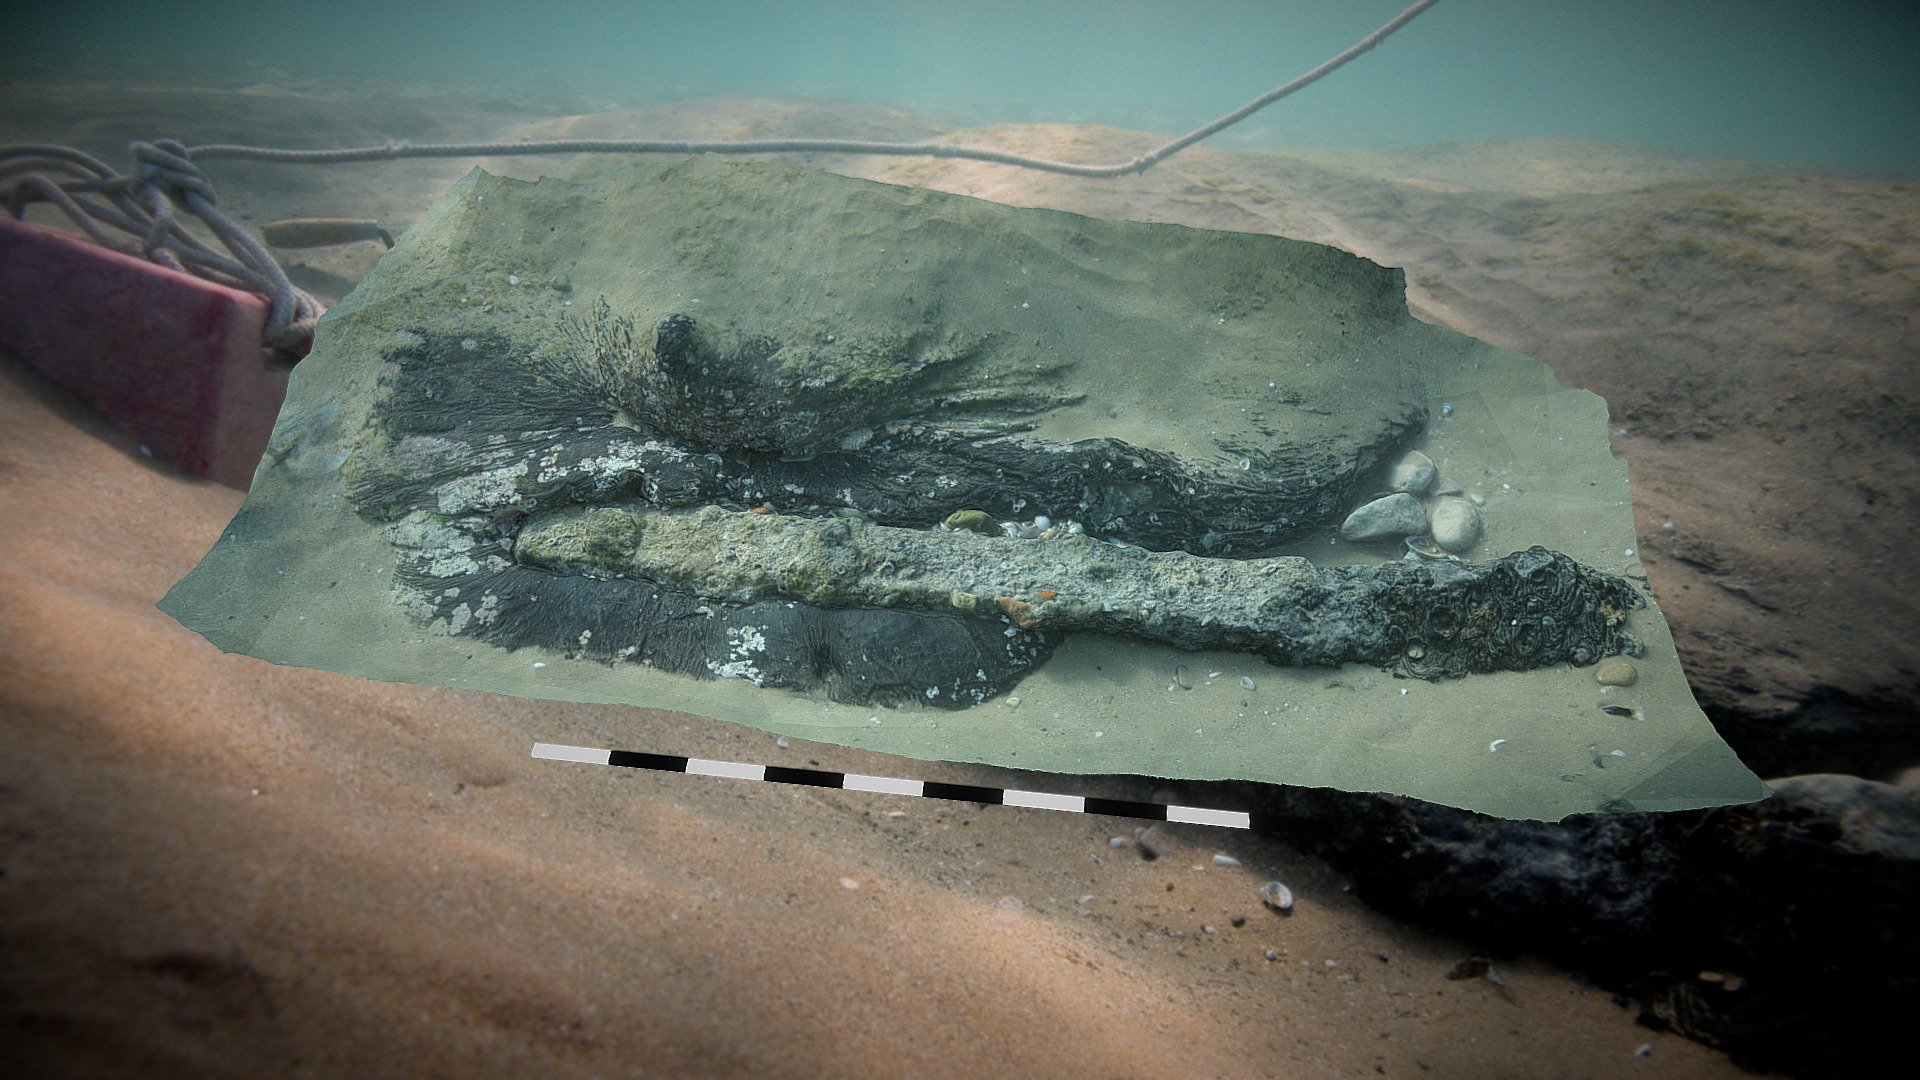 Underwater: Detall de la biga de metall - Marsay